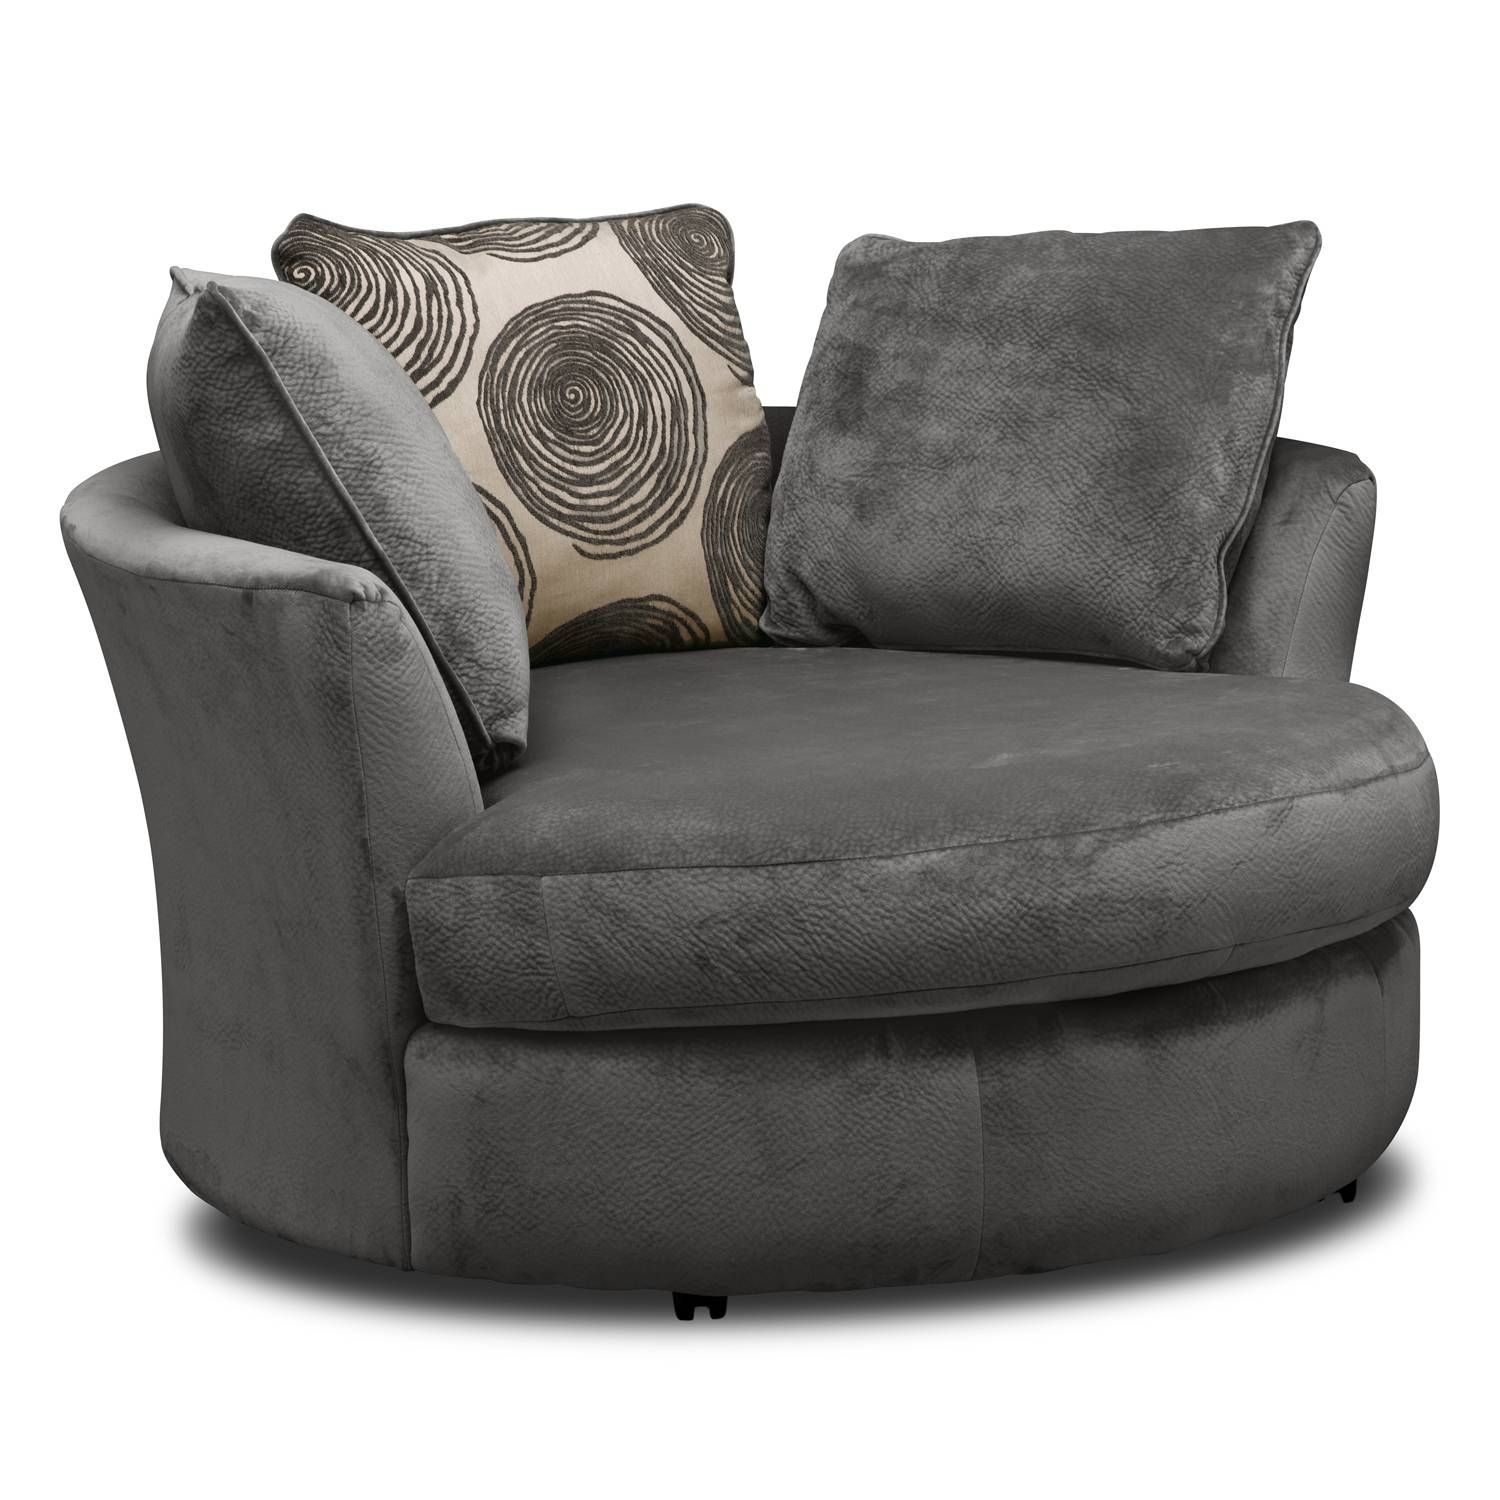 Round Sofa Chair Regarding Circular Sofa Chairs (Photo 1 of 30)